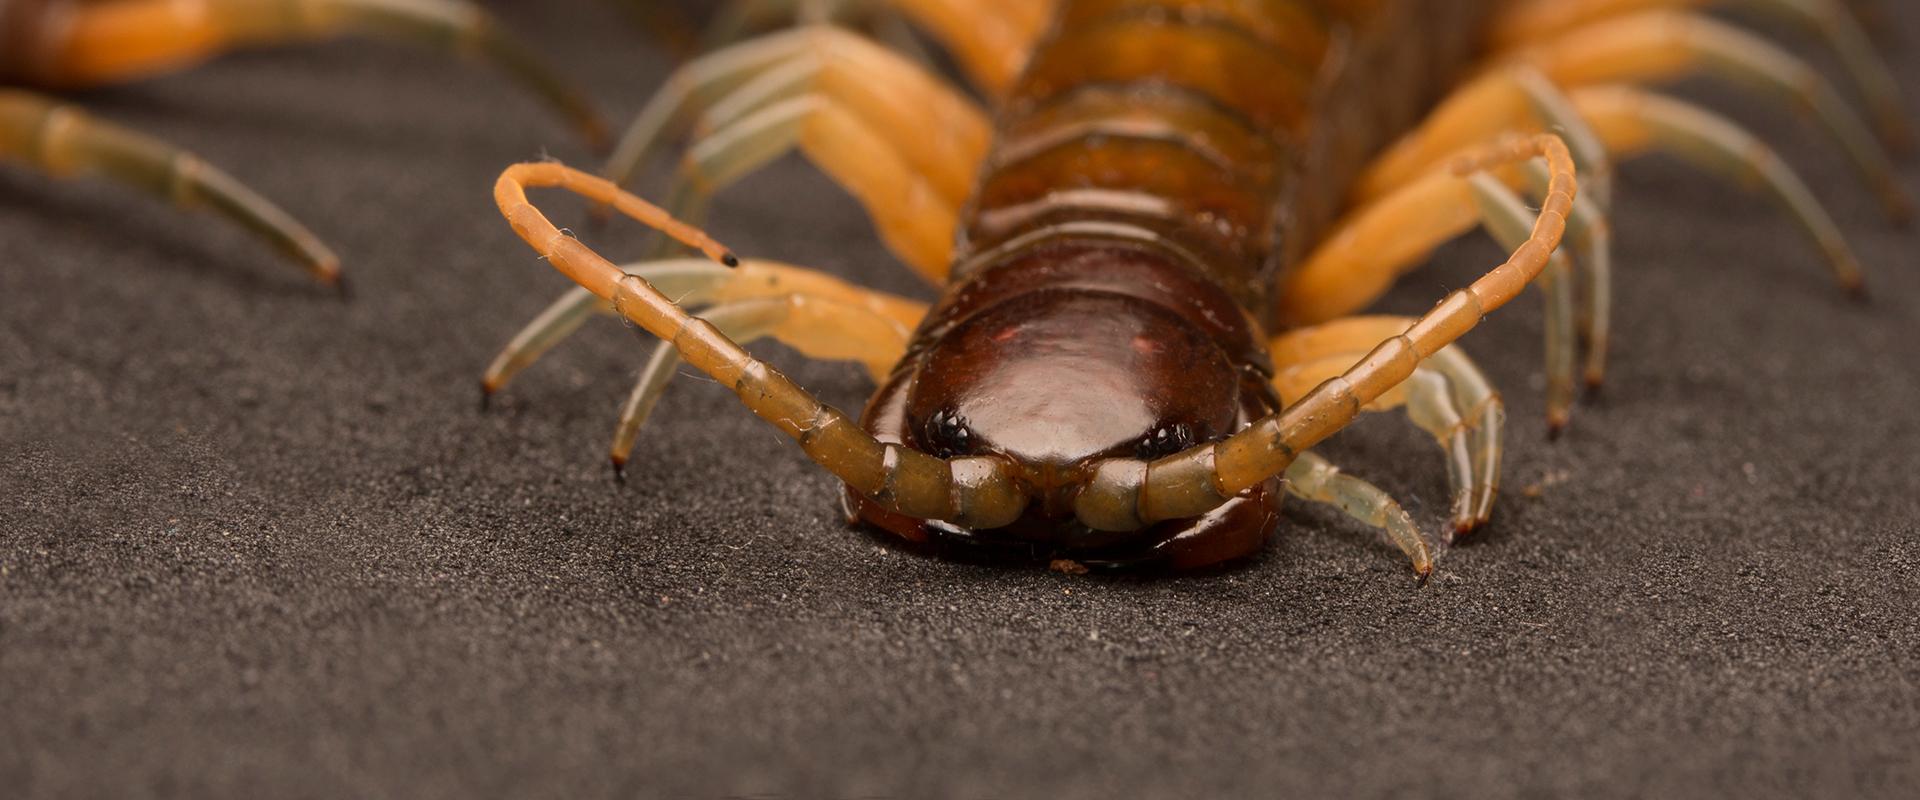 a close up of a centipede